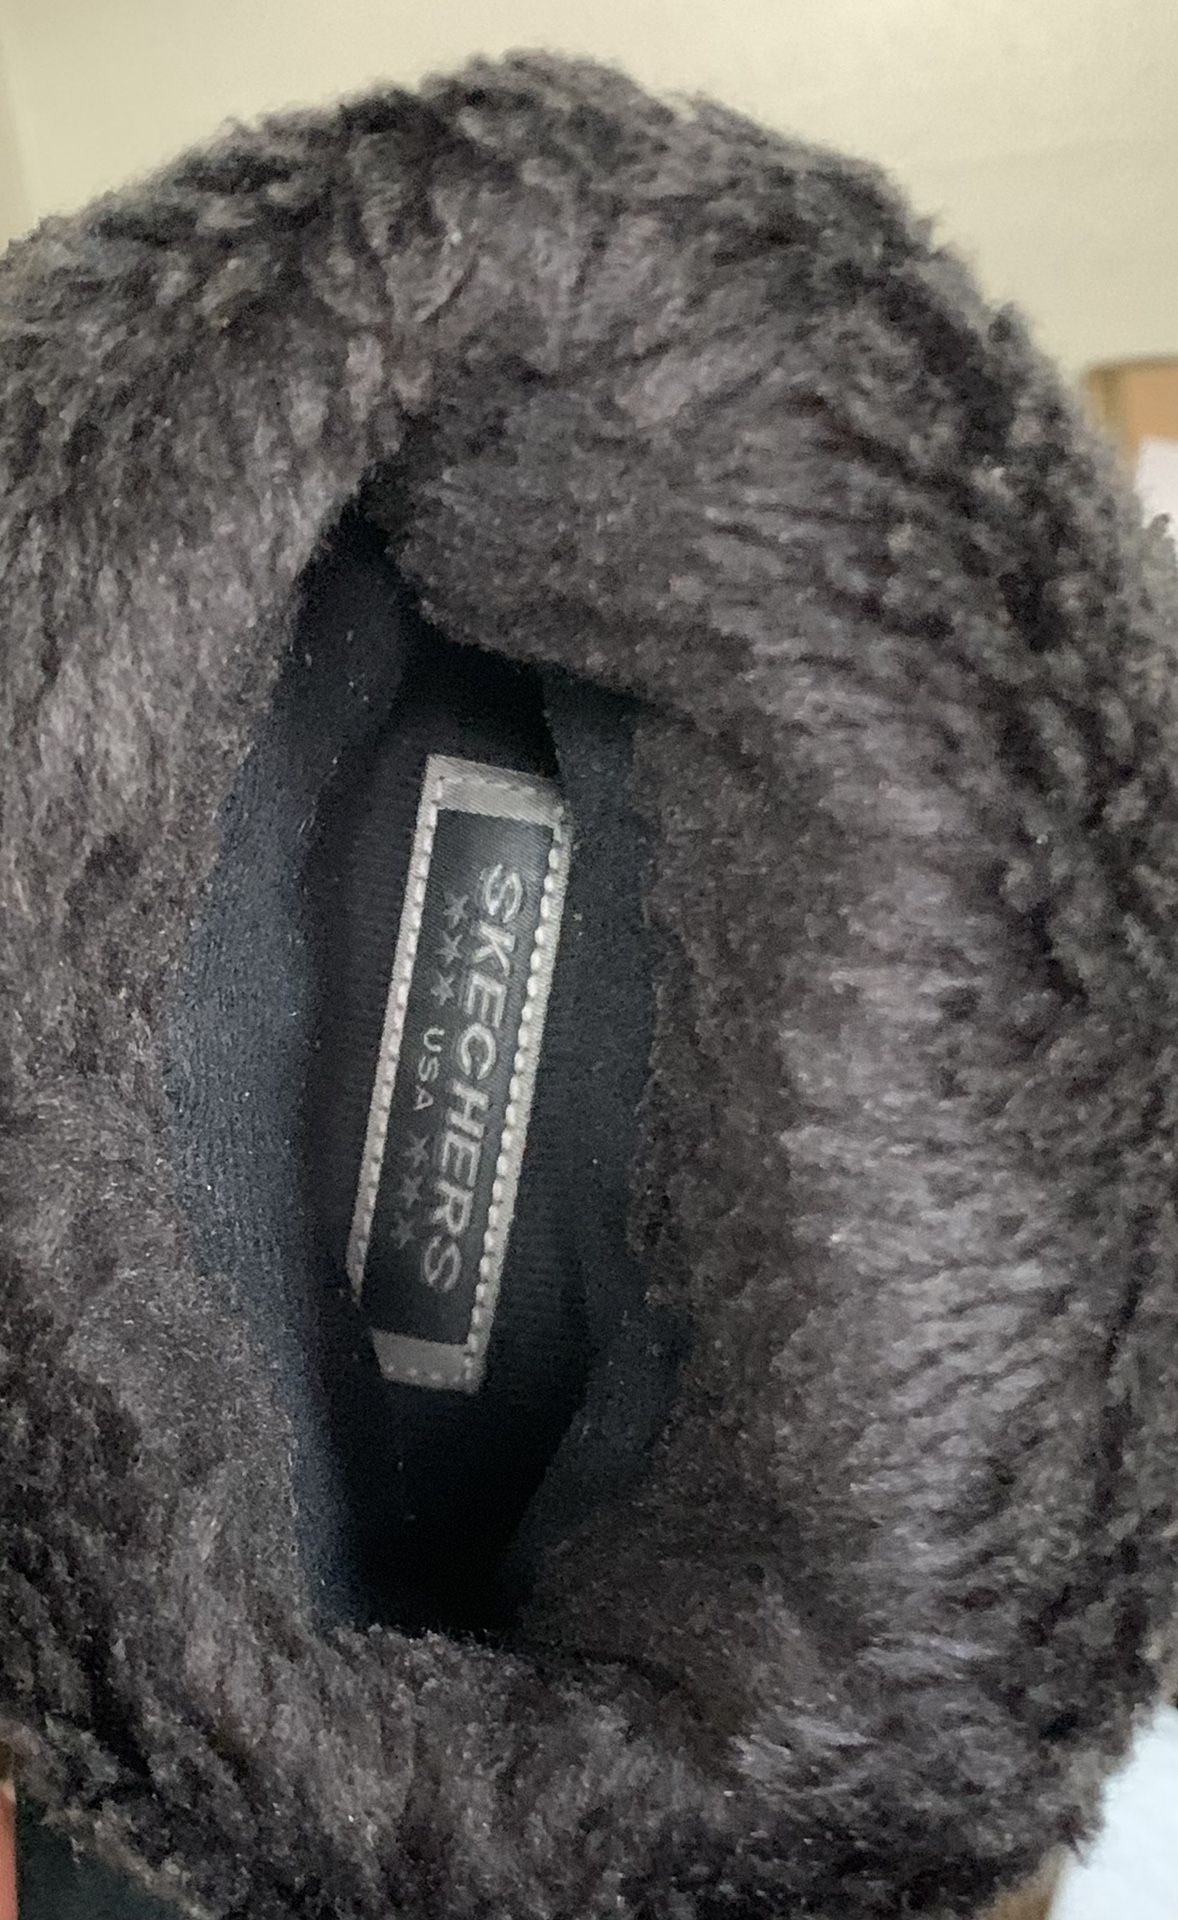 Skechers Women's Keepsakes-Freezing Temps  fur-Lined Boot Size 6.5 M